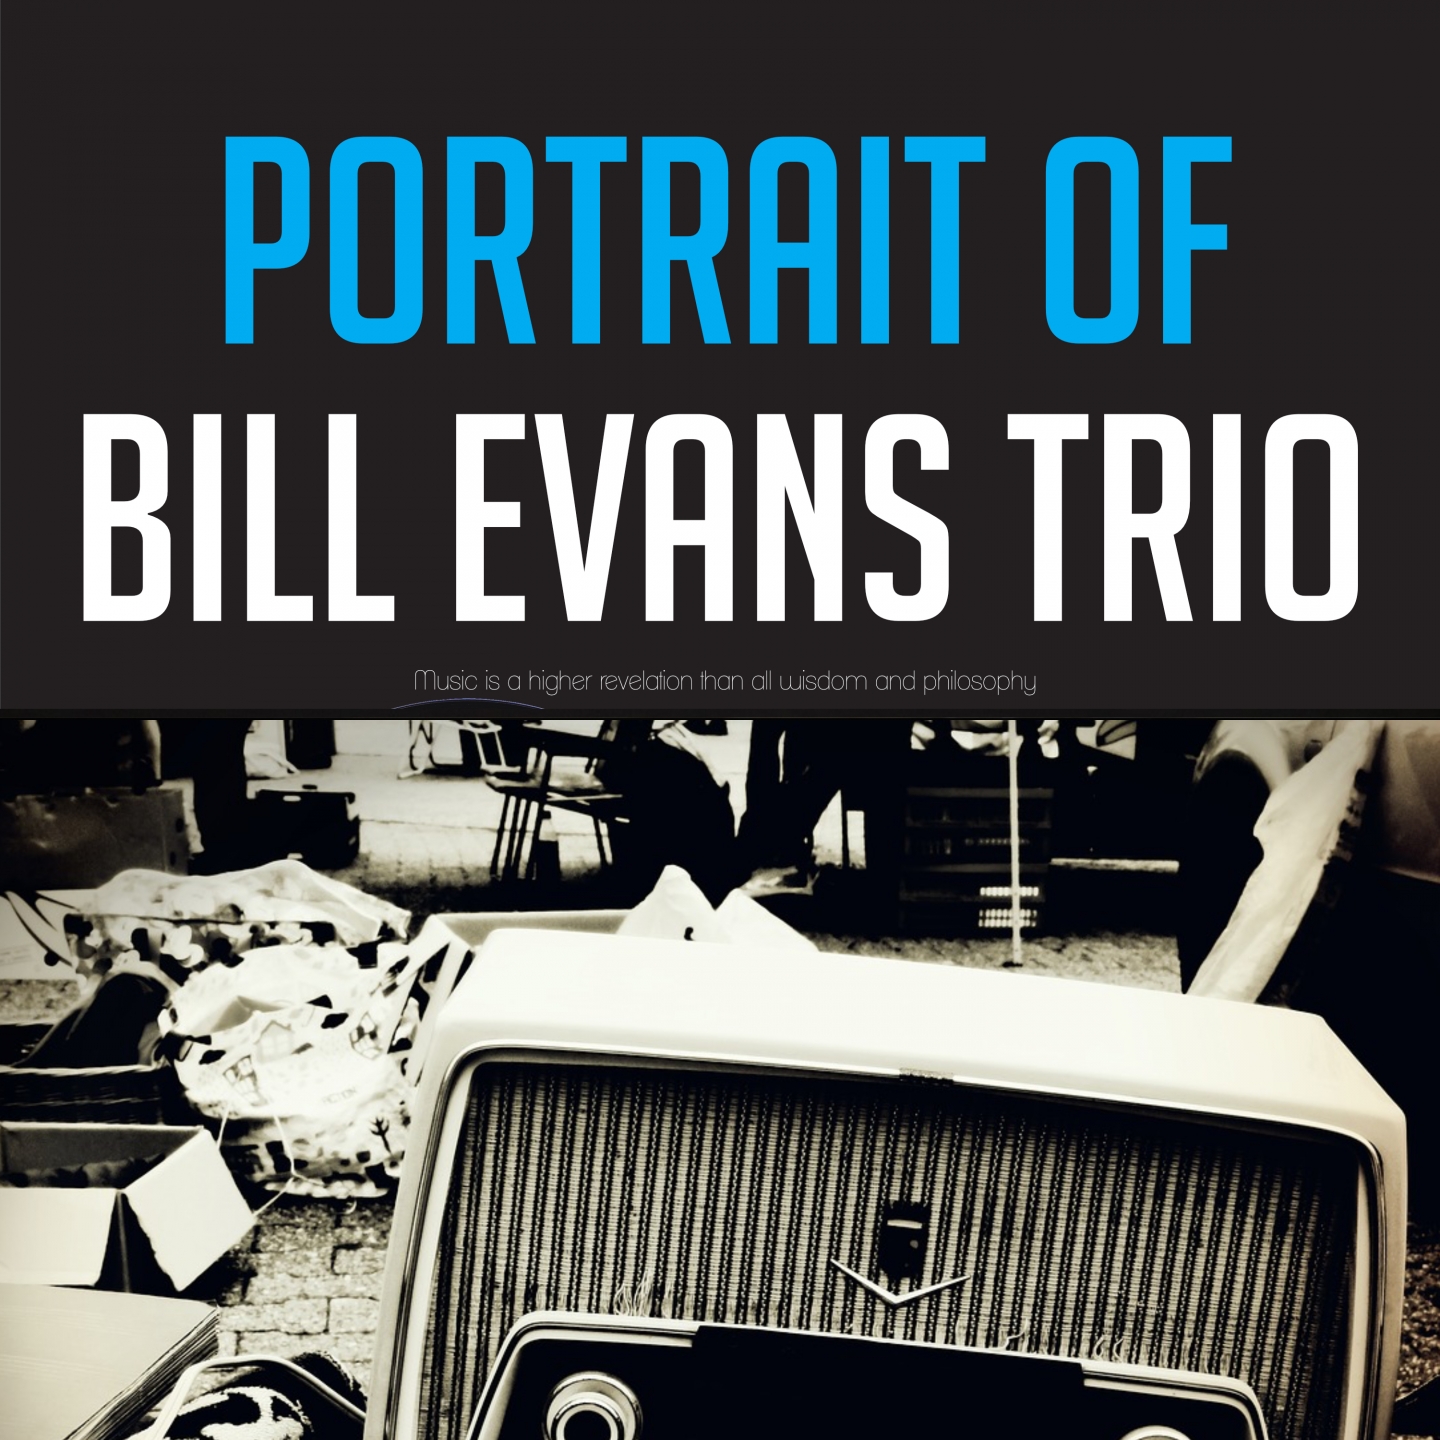 Portrait of Bill Evans Trio